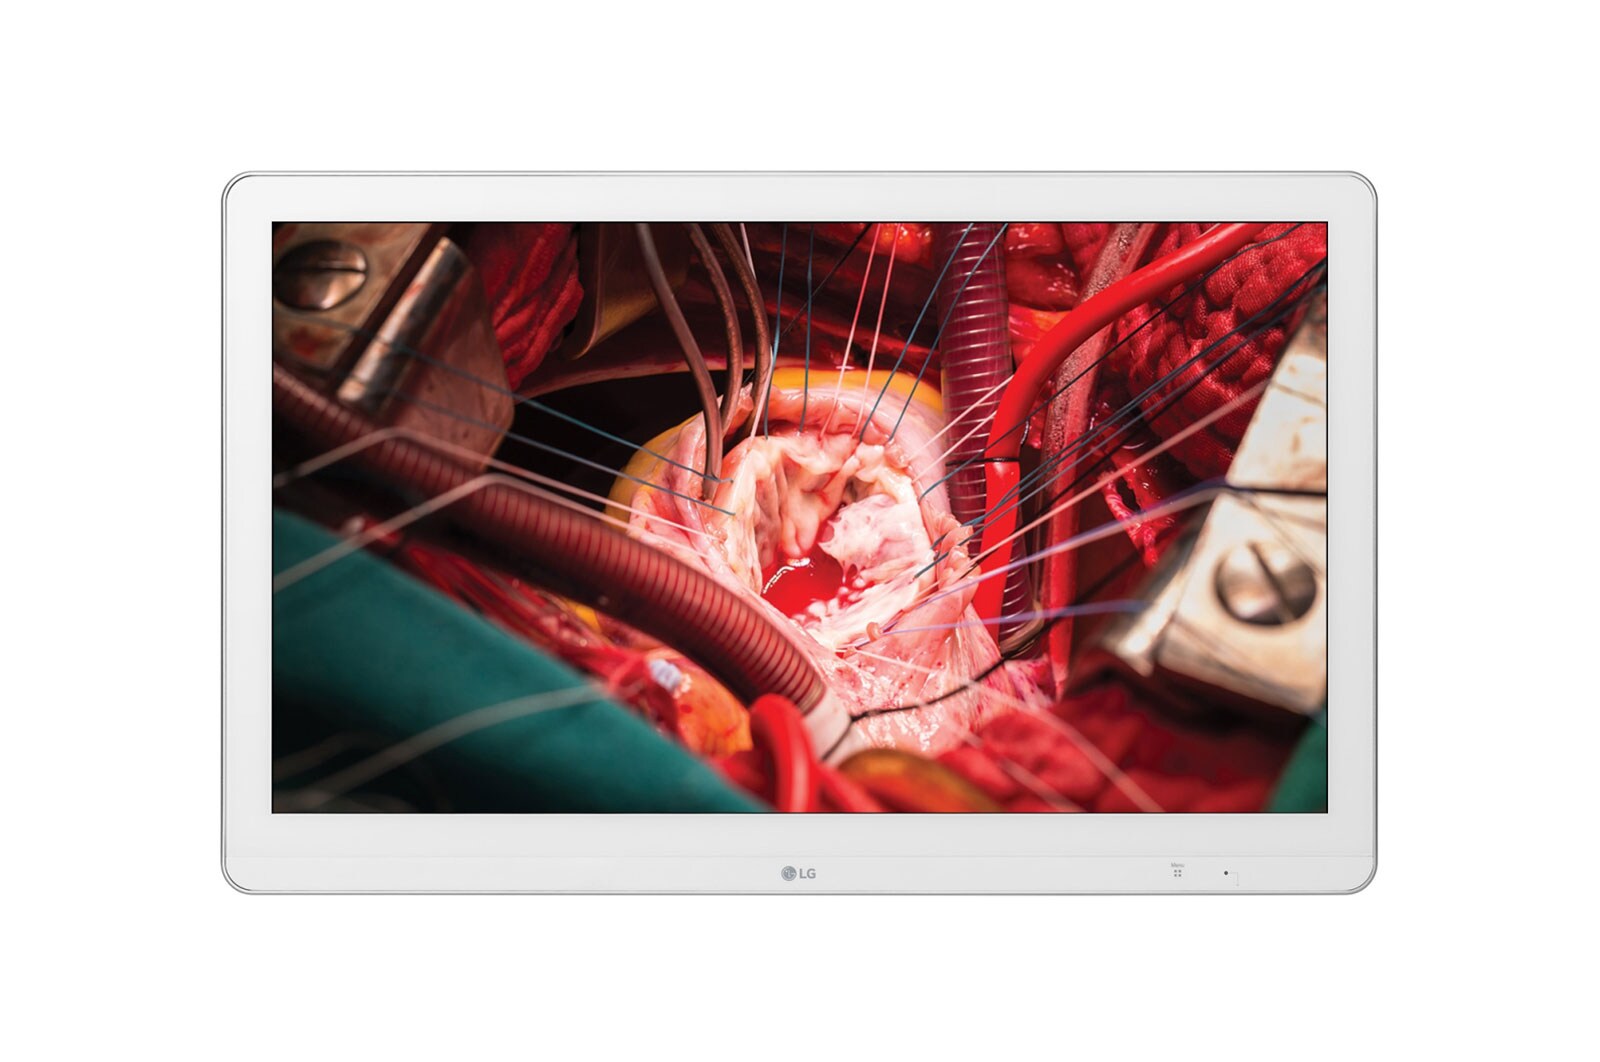 LG 27” Monitor Bedah Full HD LG, 27HK510S-W